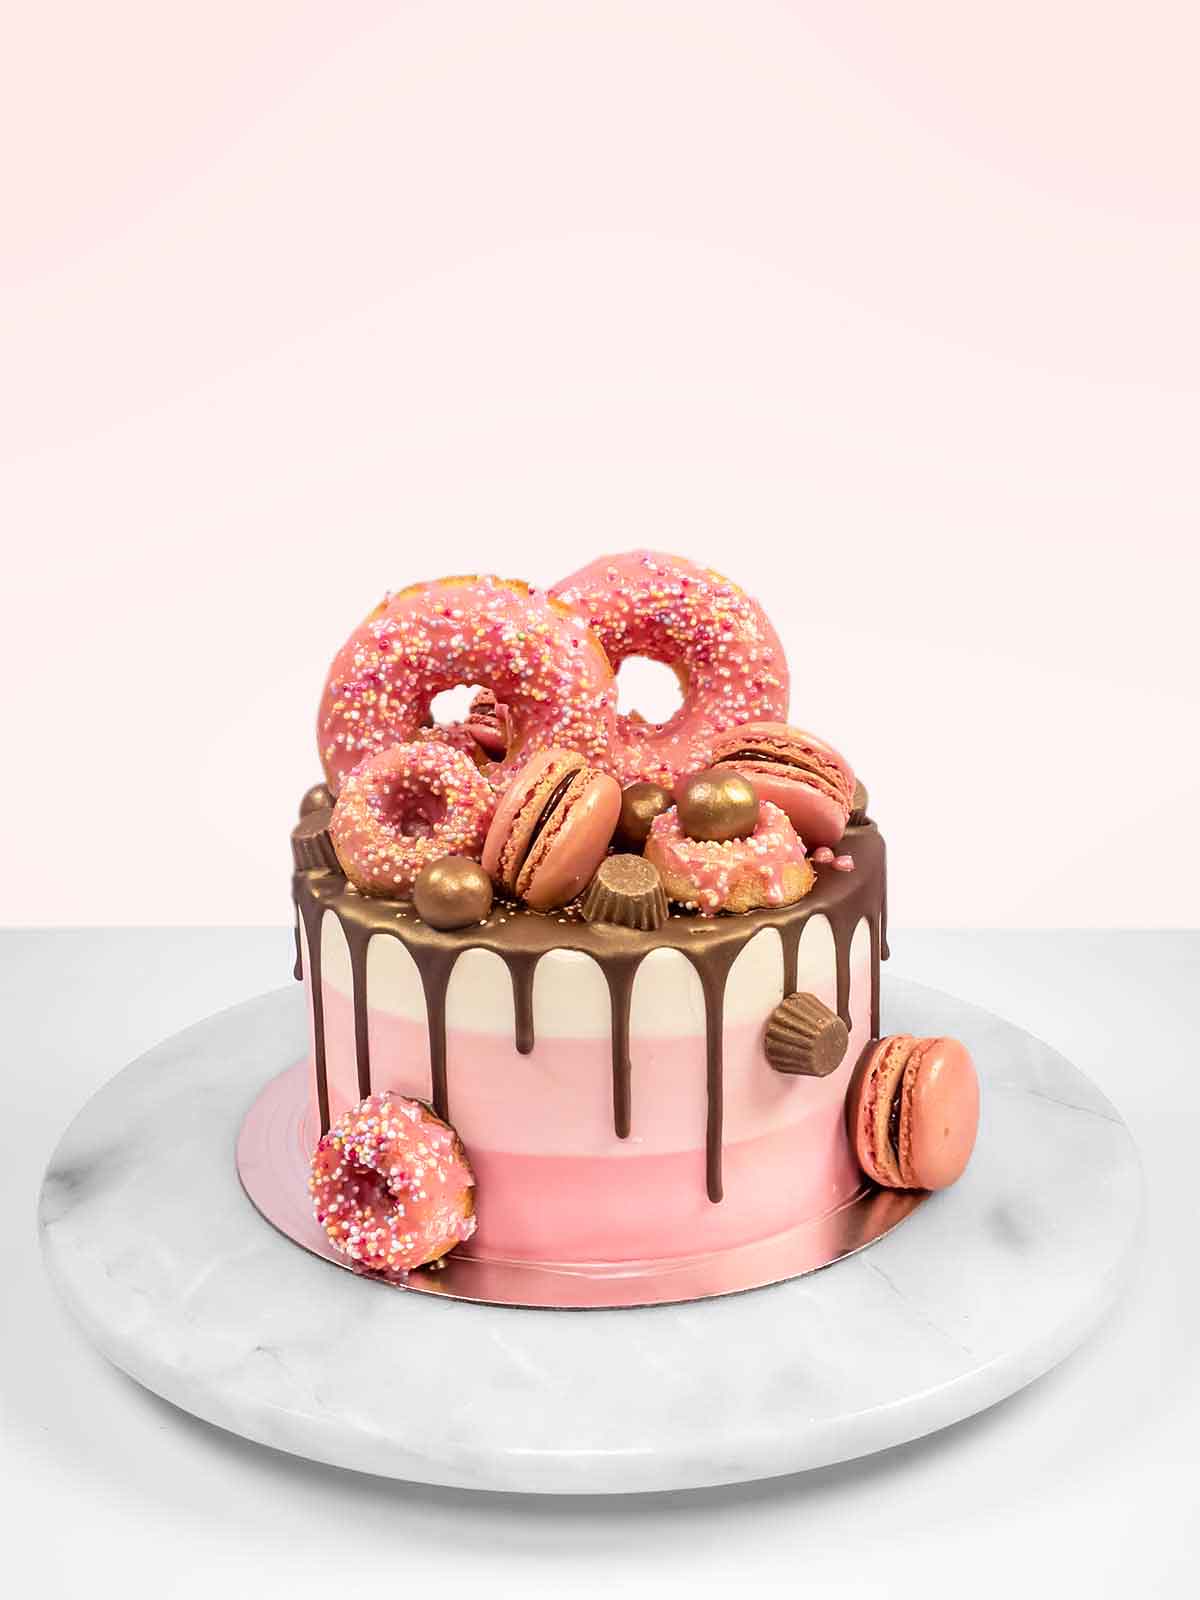 30+ Best Birthday Cakes in Los Angeles